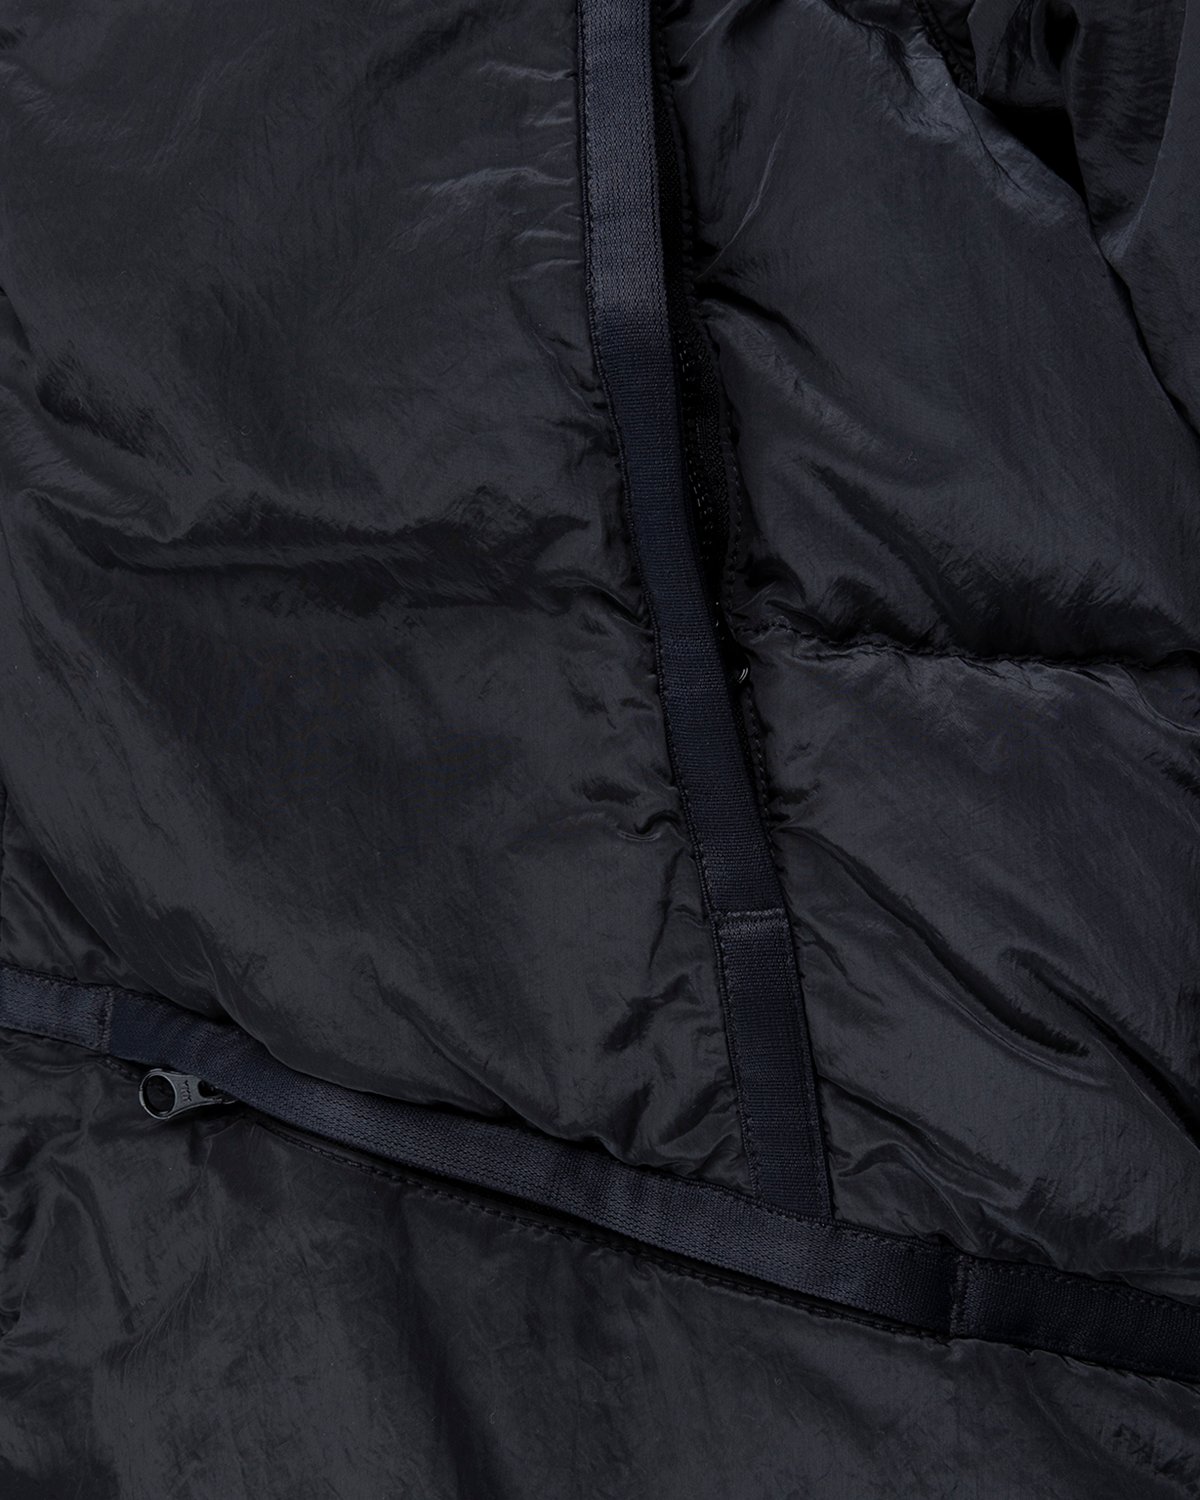 Stone Island - Real Down Jacket Charcoal - Clothing - Black - Image 6